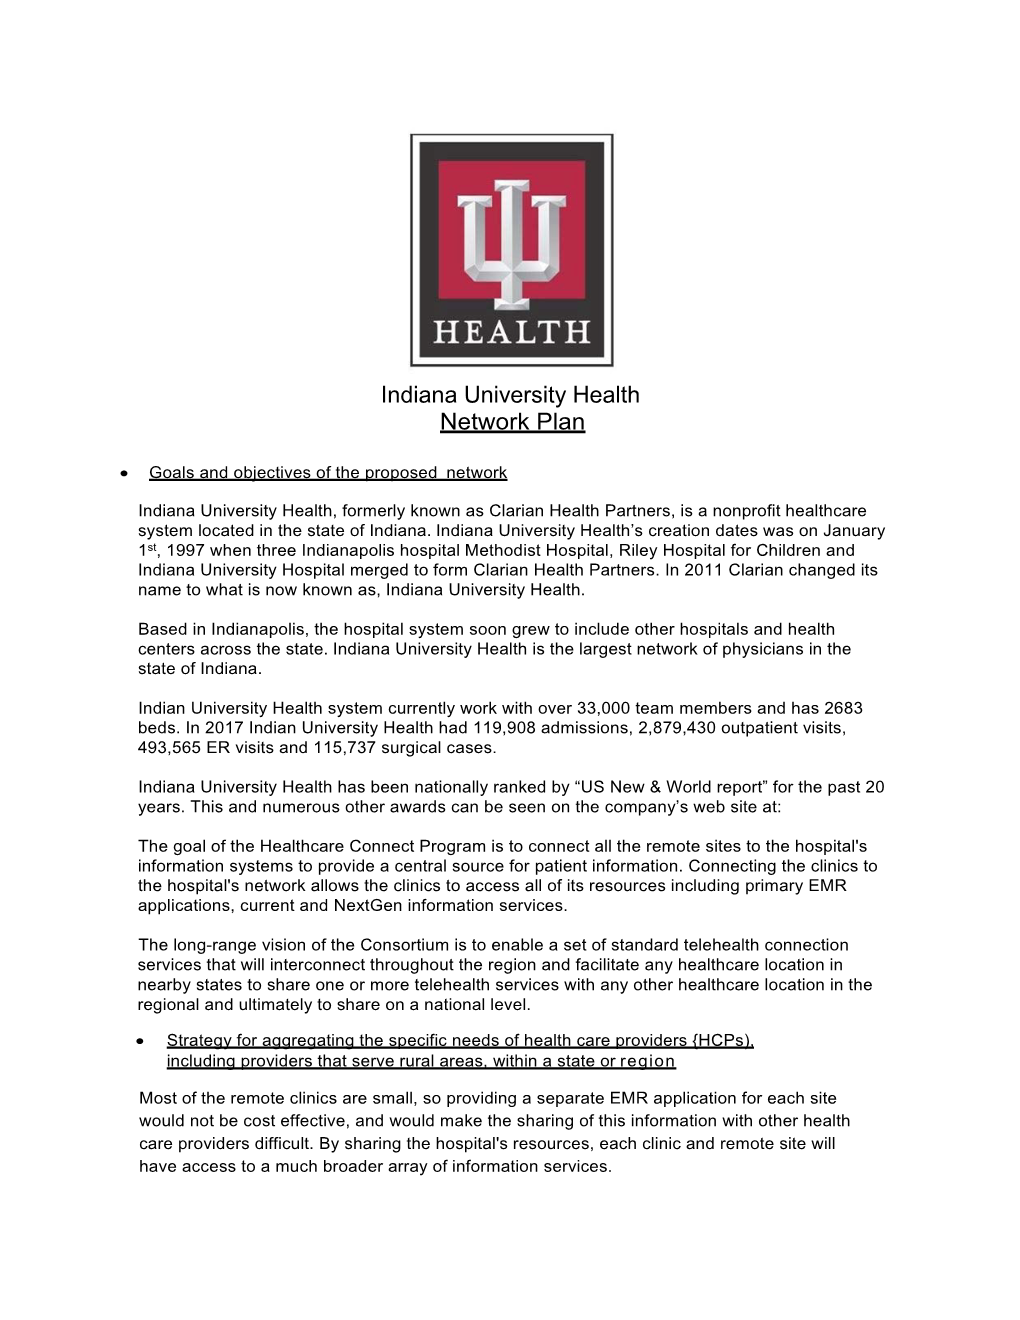 Indiana University Health Network Plan